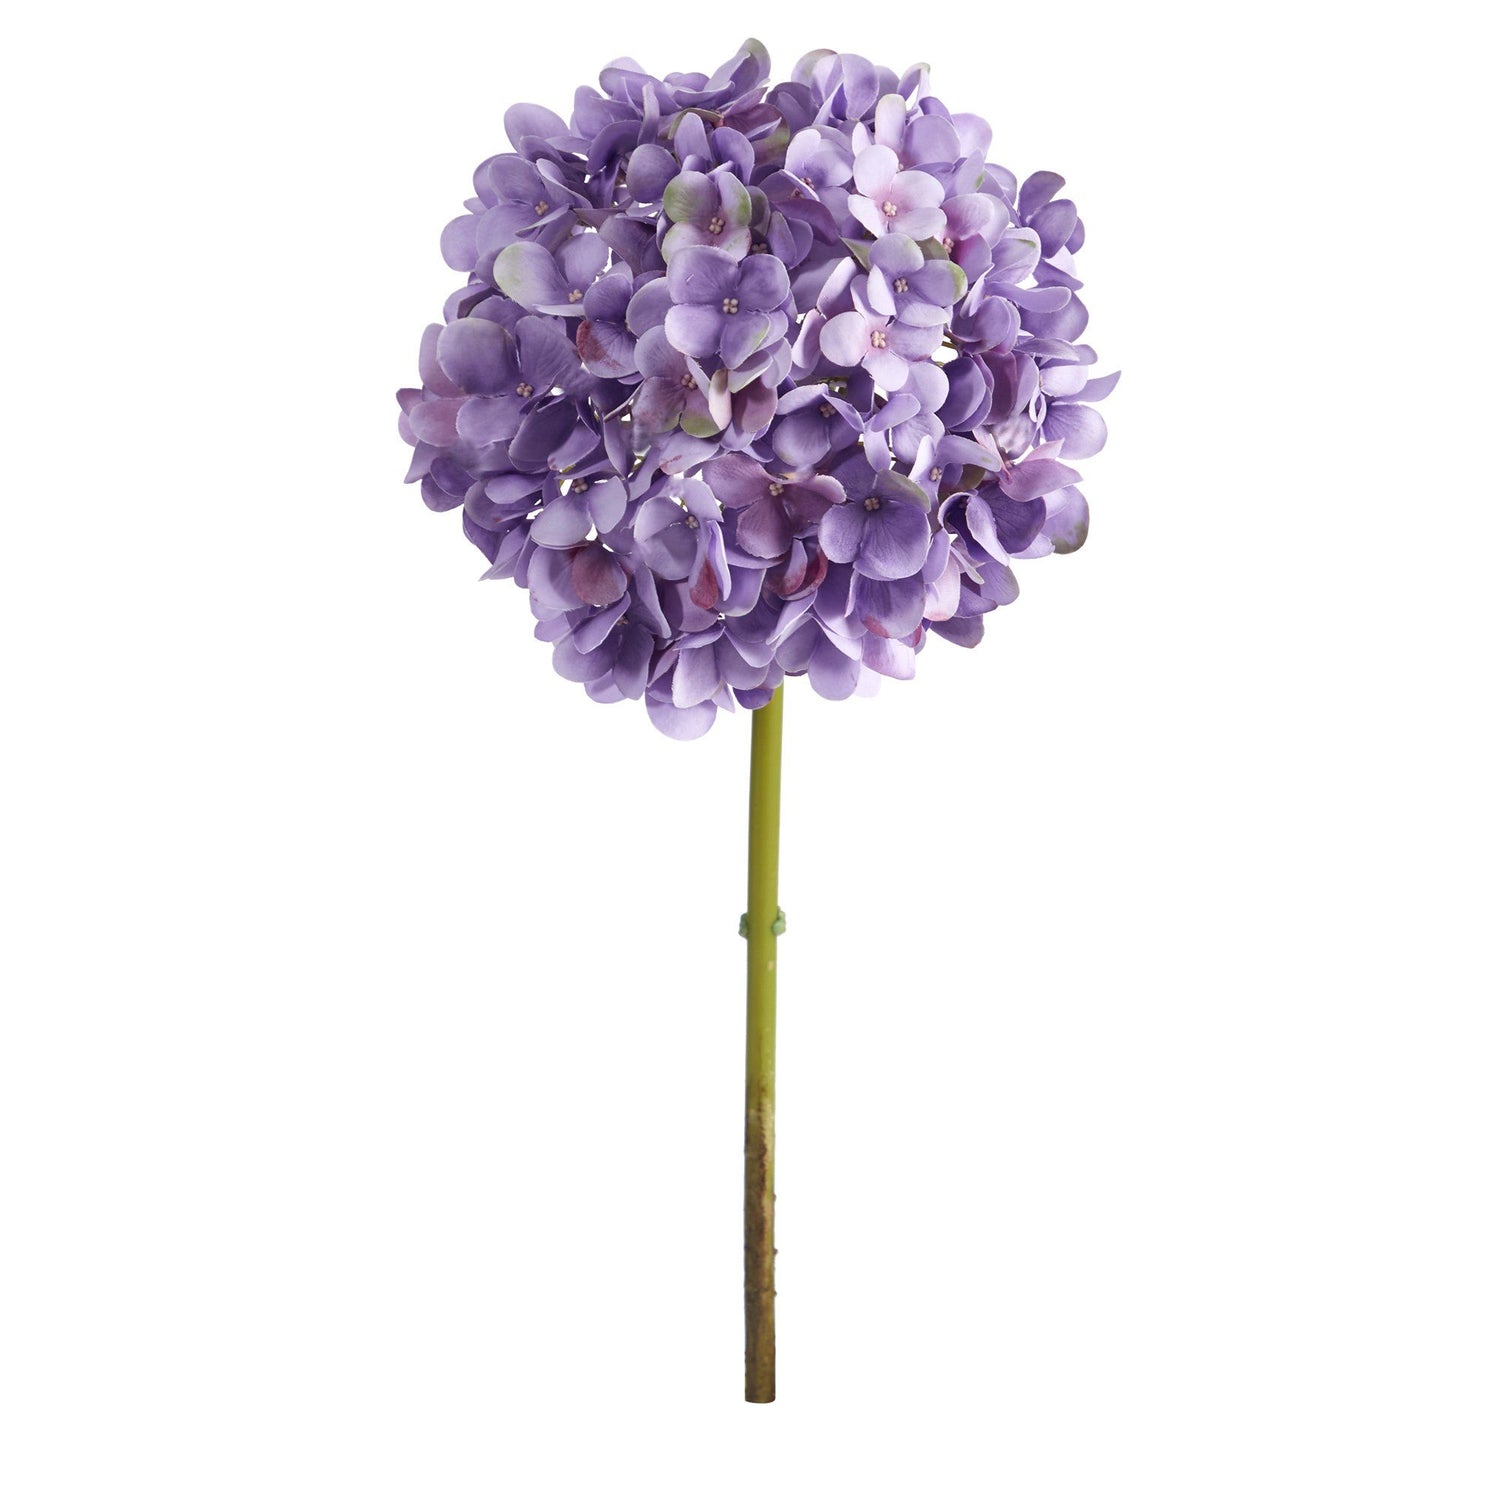 Set of 12: 33-Inch Purple Hydrangea Flower Stems with Lifelike